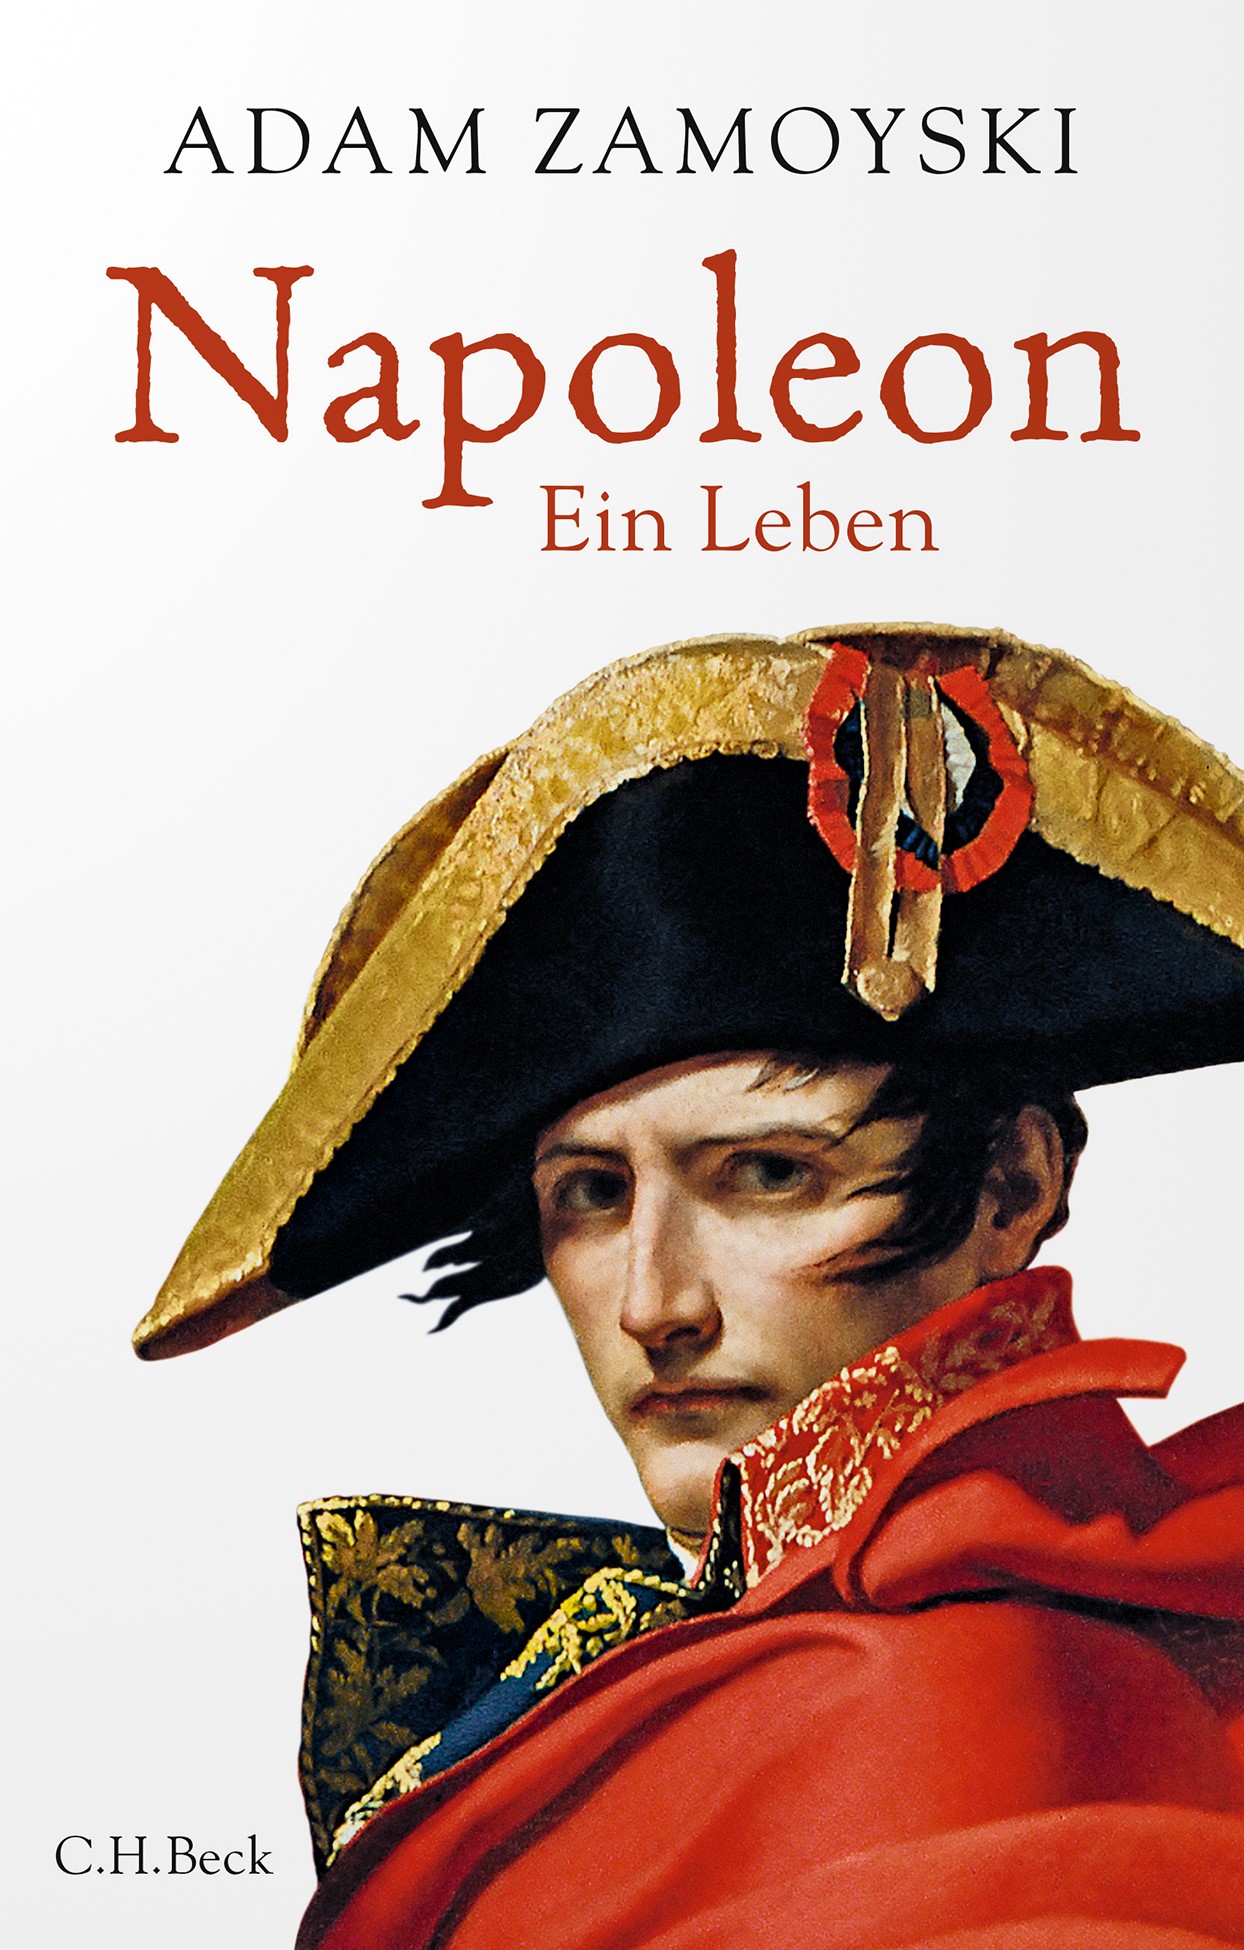 Cover: Zamoyski, Adam, Napoleon